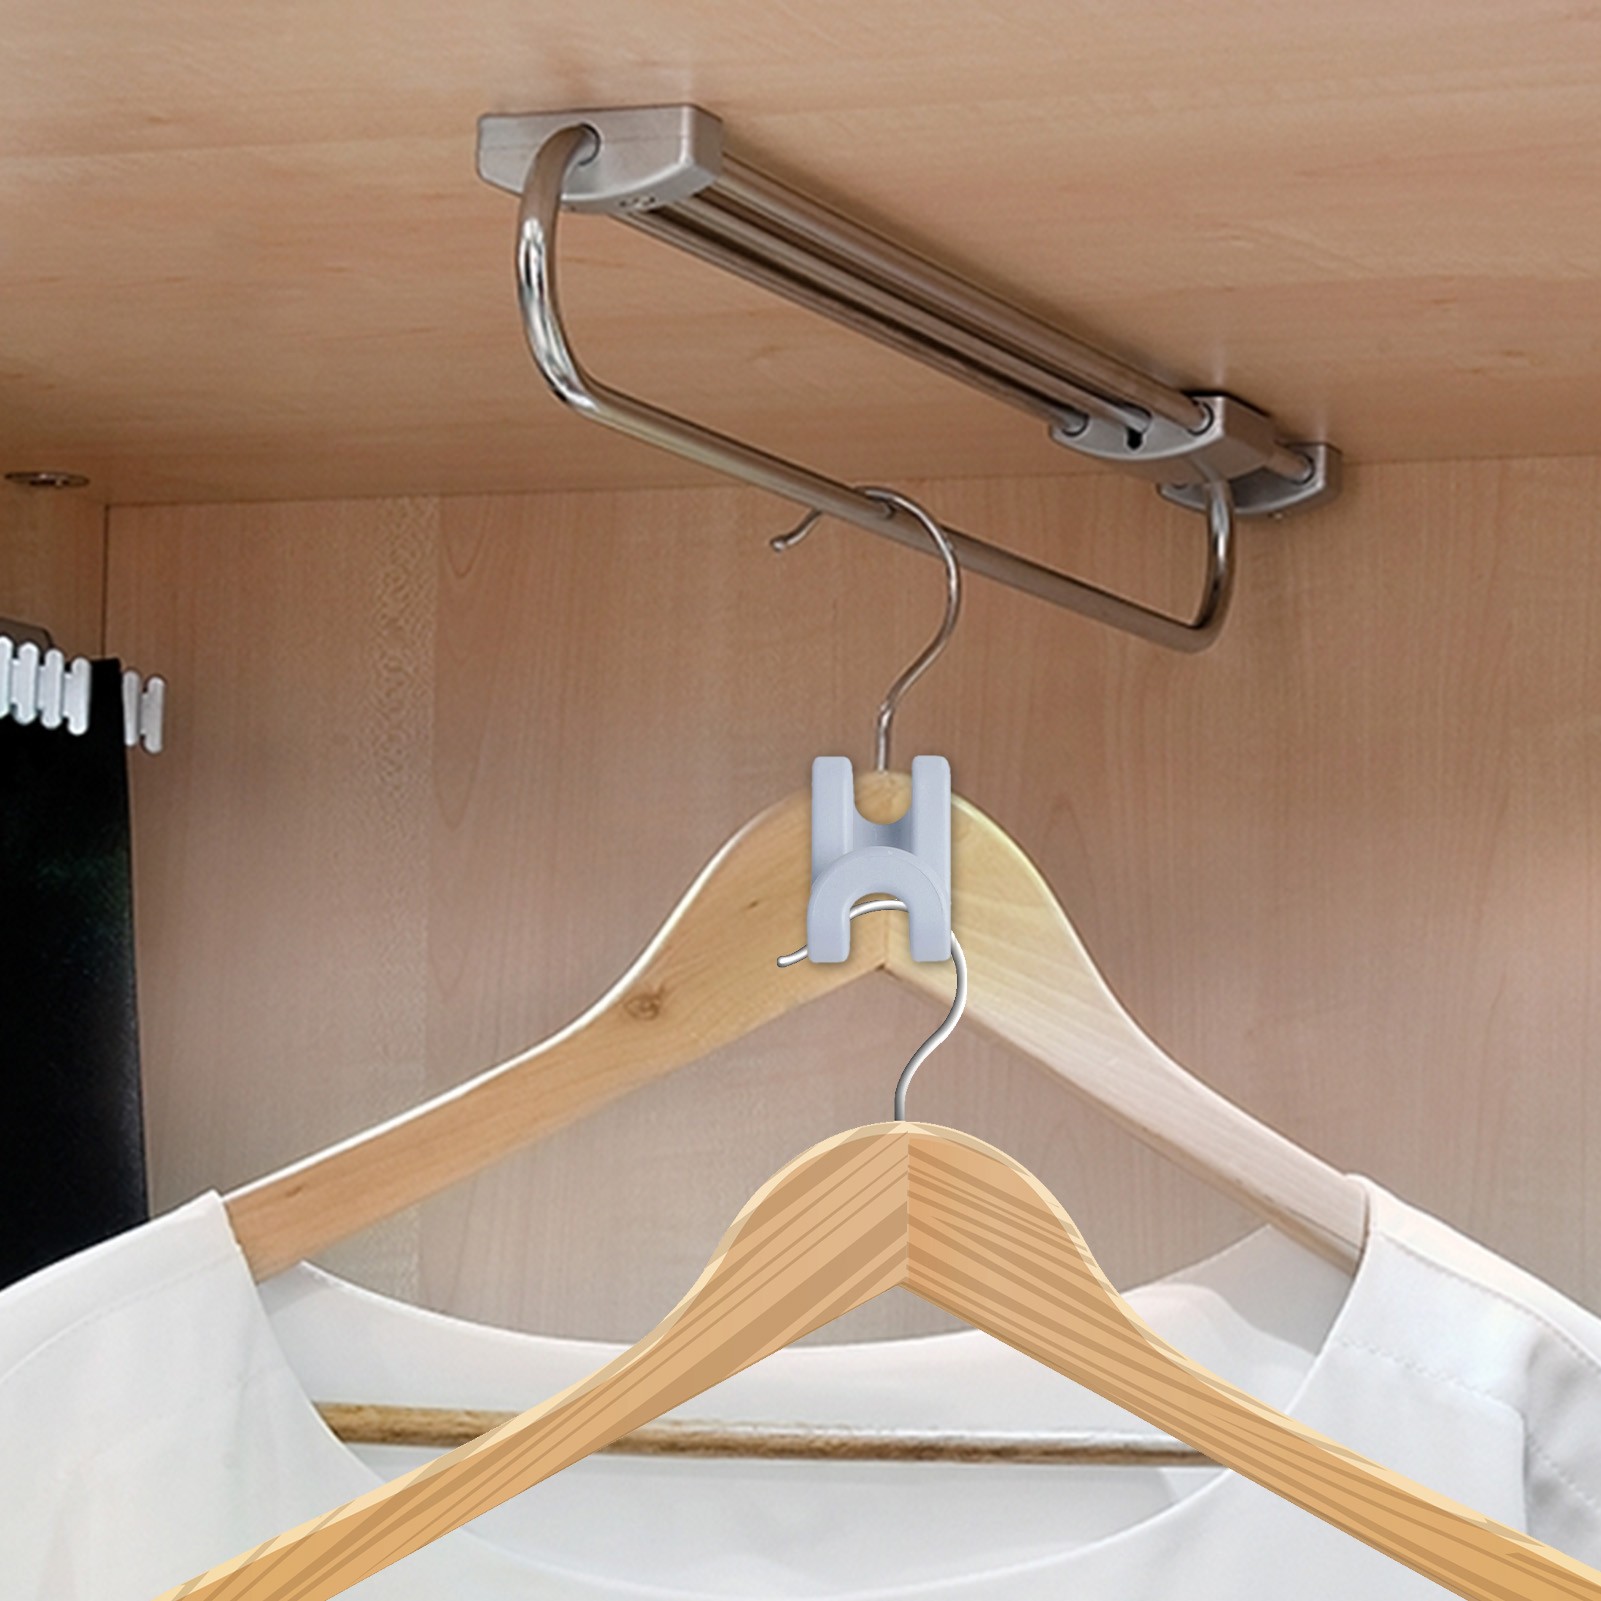 Clothes Hanger Connector Hook Clothes Hanger Clips Extender Space Saving Hook Convenient Tool Closet Organizer Heavy Duty